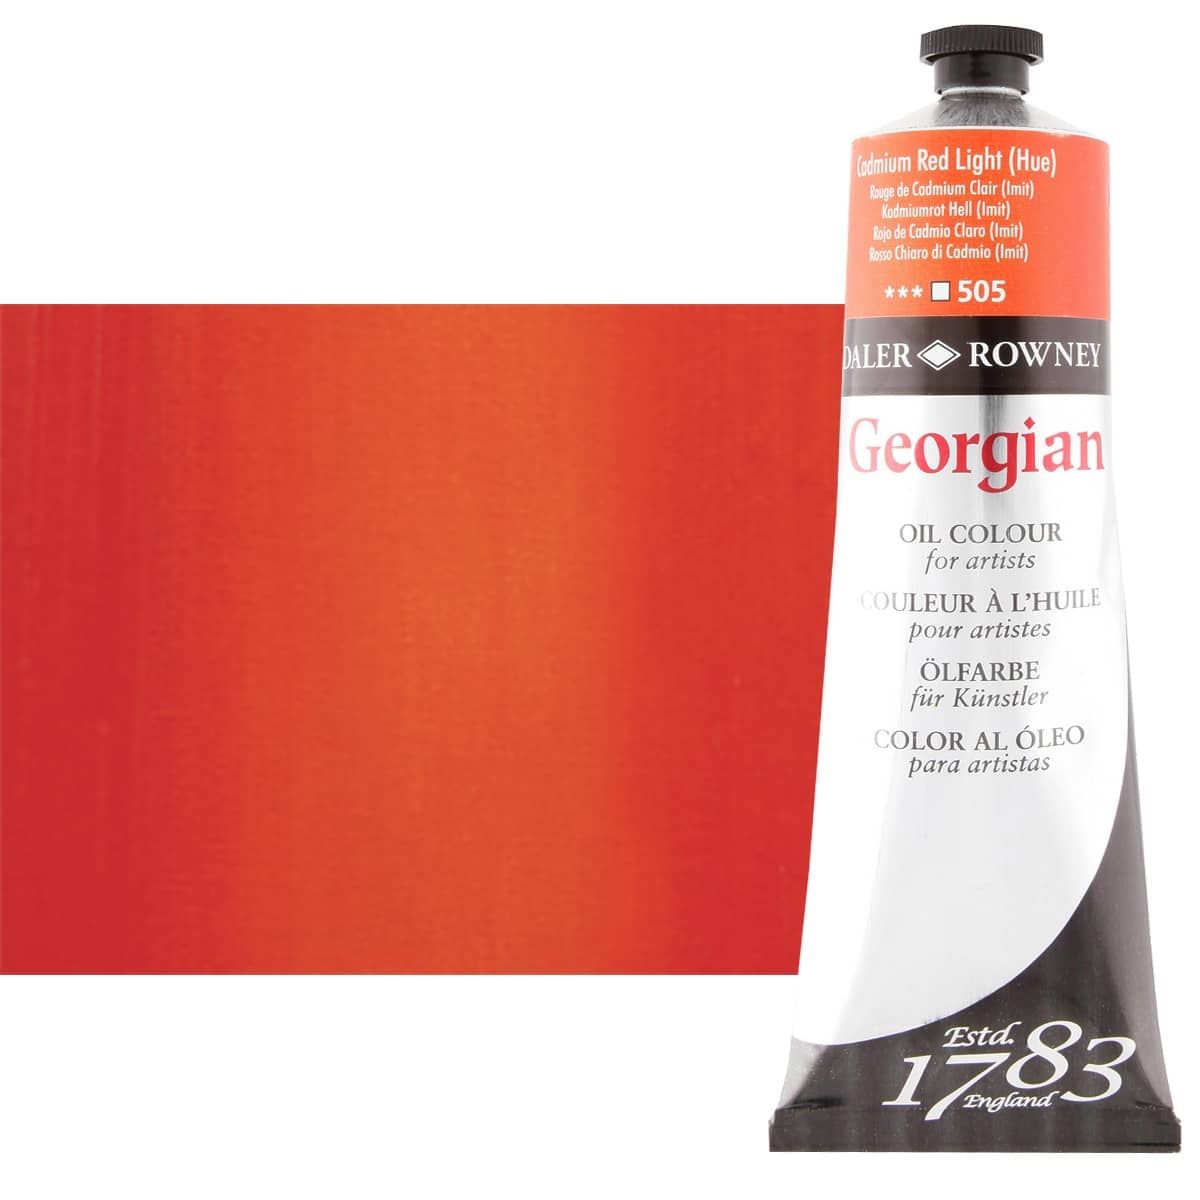 Daler-Rowney Georgian Oil Color 225ml Tube - Cadmium Red Light Hue